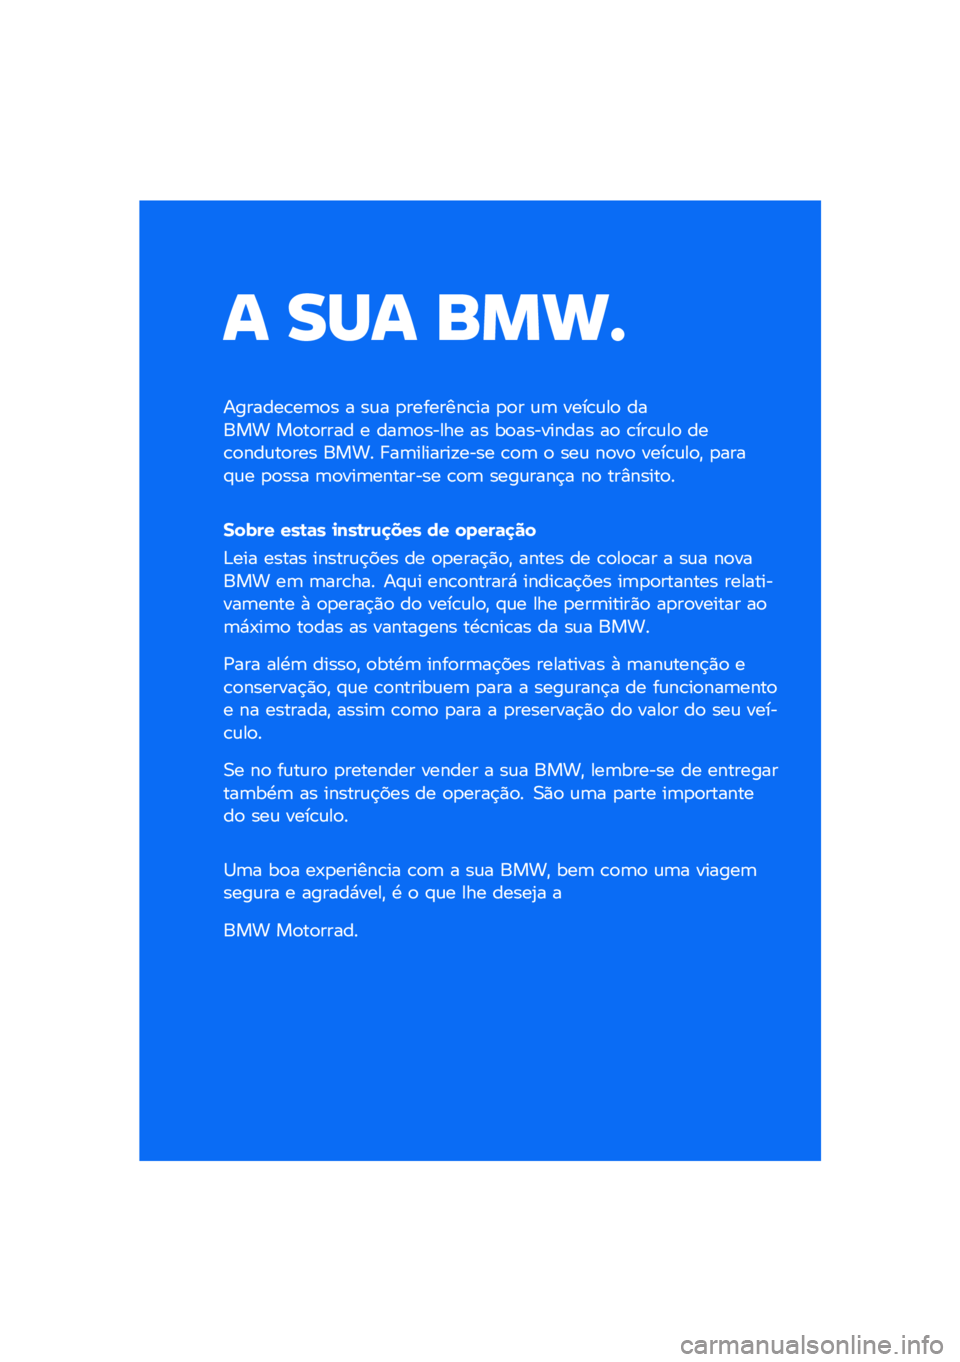 BMW MOTORRAD R 1250 RS 2021  Manual do condutor (in Portuguese) � ��� ����\b
�������\b��	�
� � ��\f� �
��������\b�� �
�
� �\f�	 ����\b�\f��
 ����� ��
��
���� � ���	�
����� �� ��
��������� ��
 �\b���